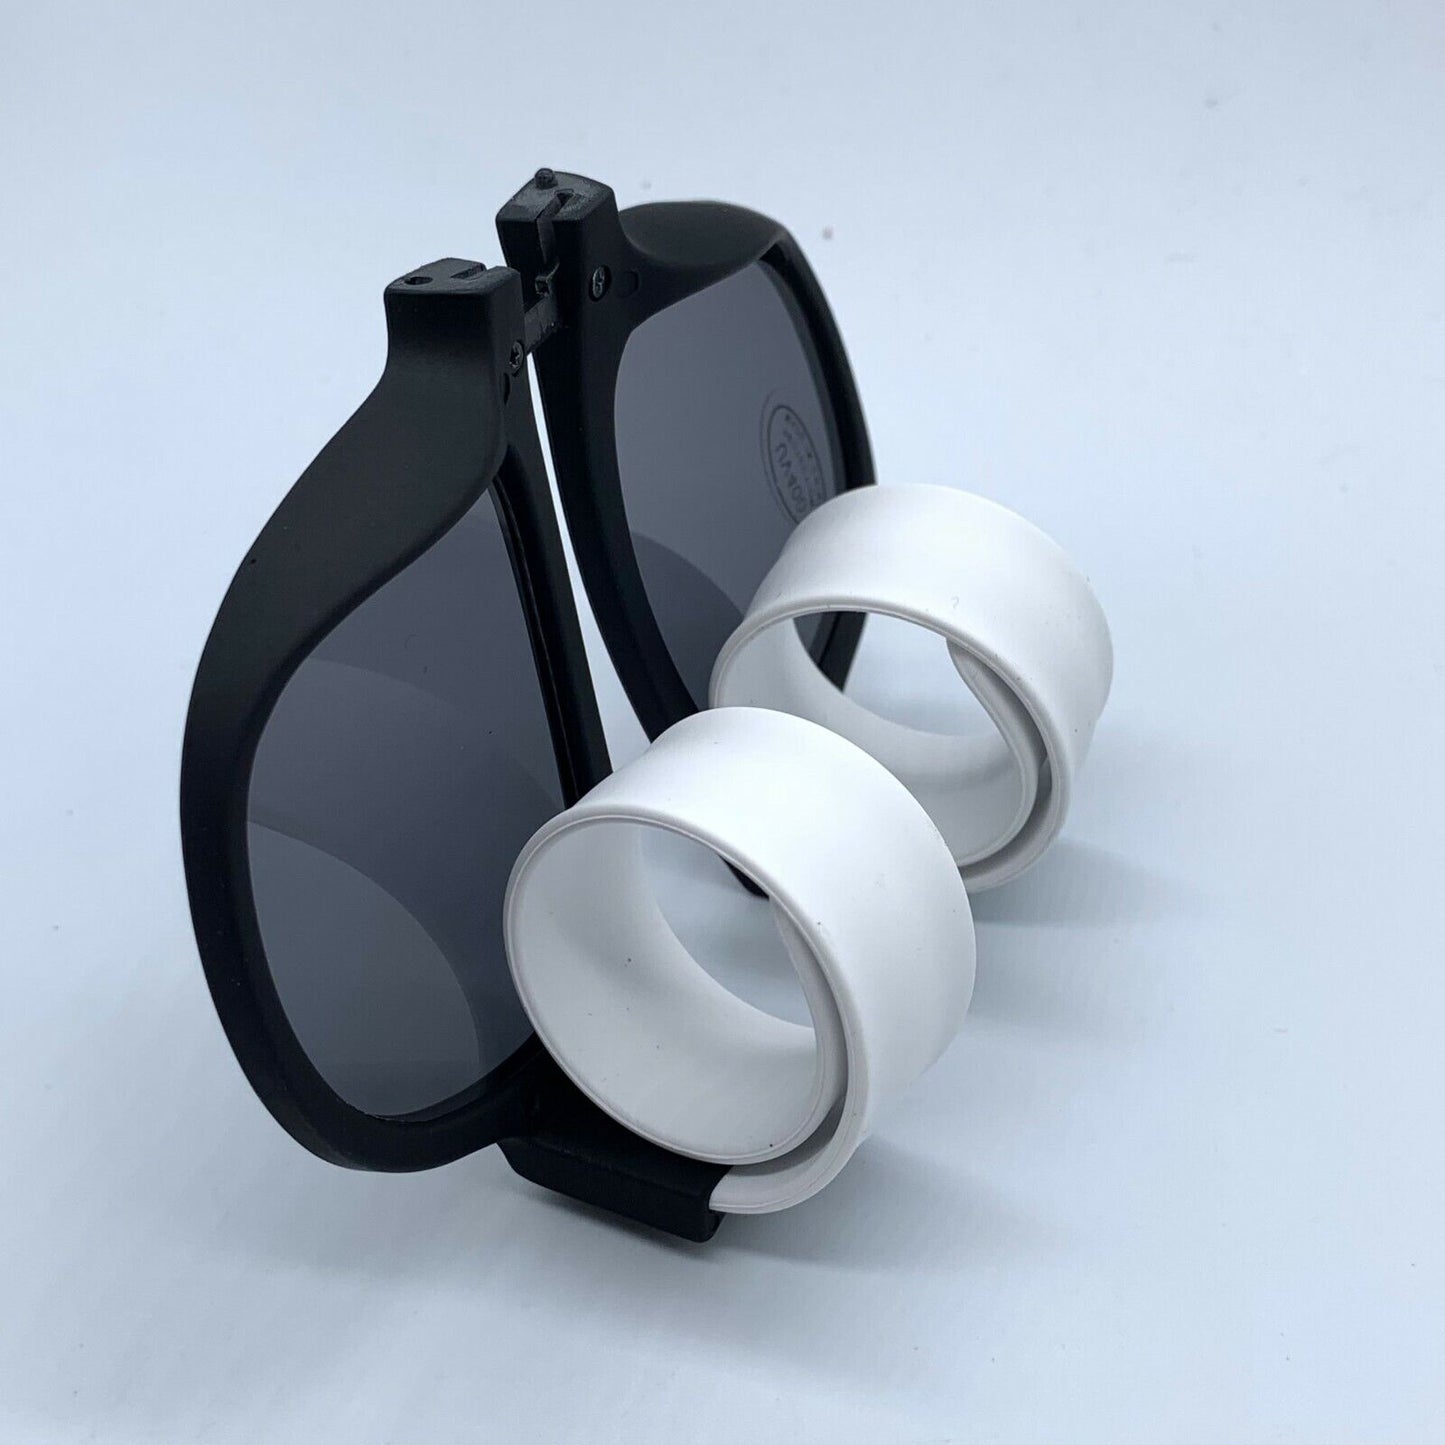 White Sunglasses & Wristband in One Foldable Clap & Go Foldable Stylish Shades